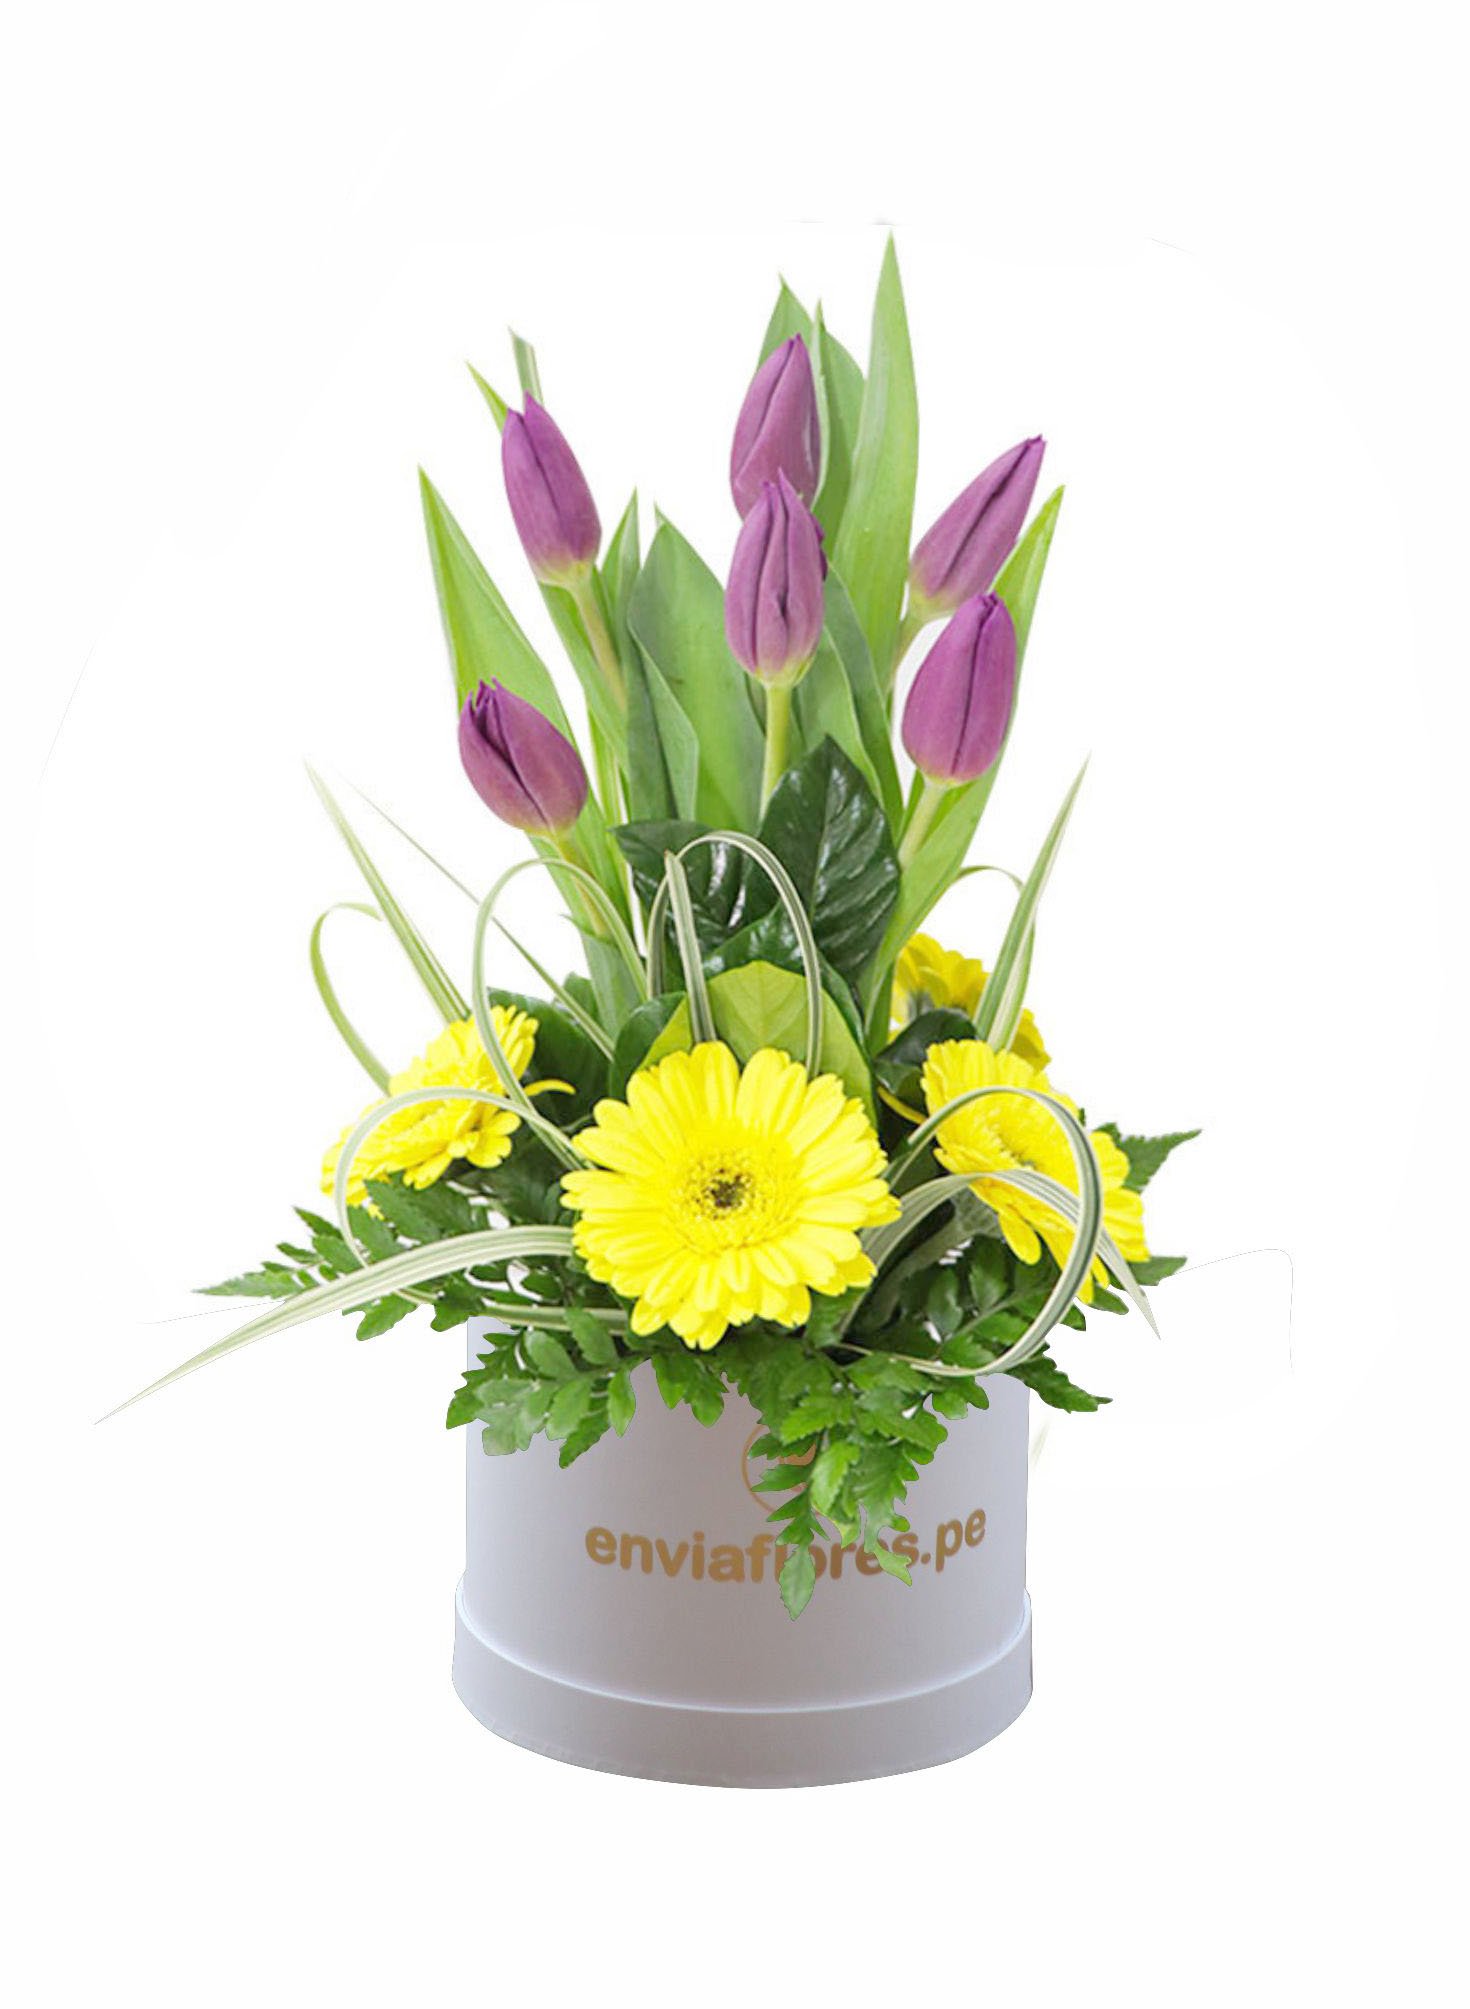 arreglo floral de tulipanes lilas - cusco - Floreria en juliaca envia flores